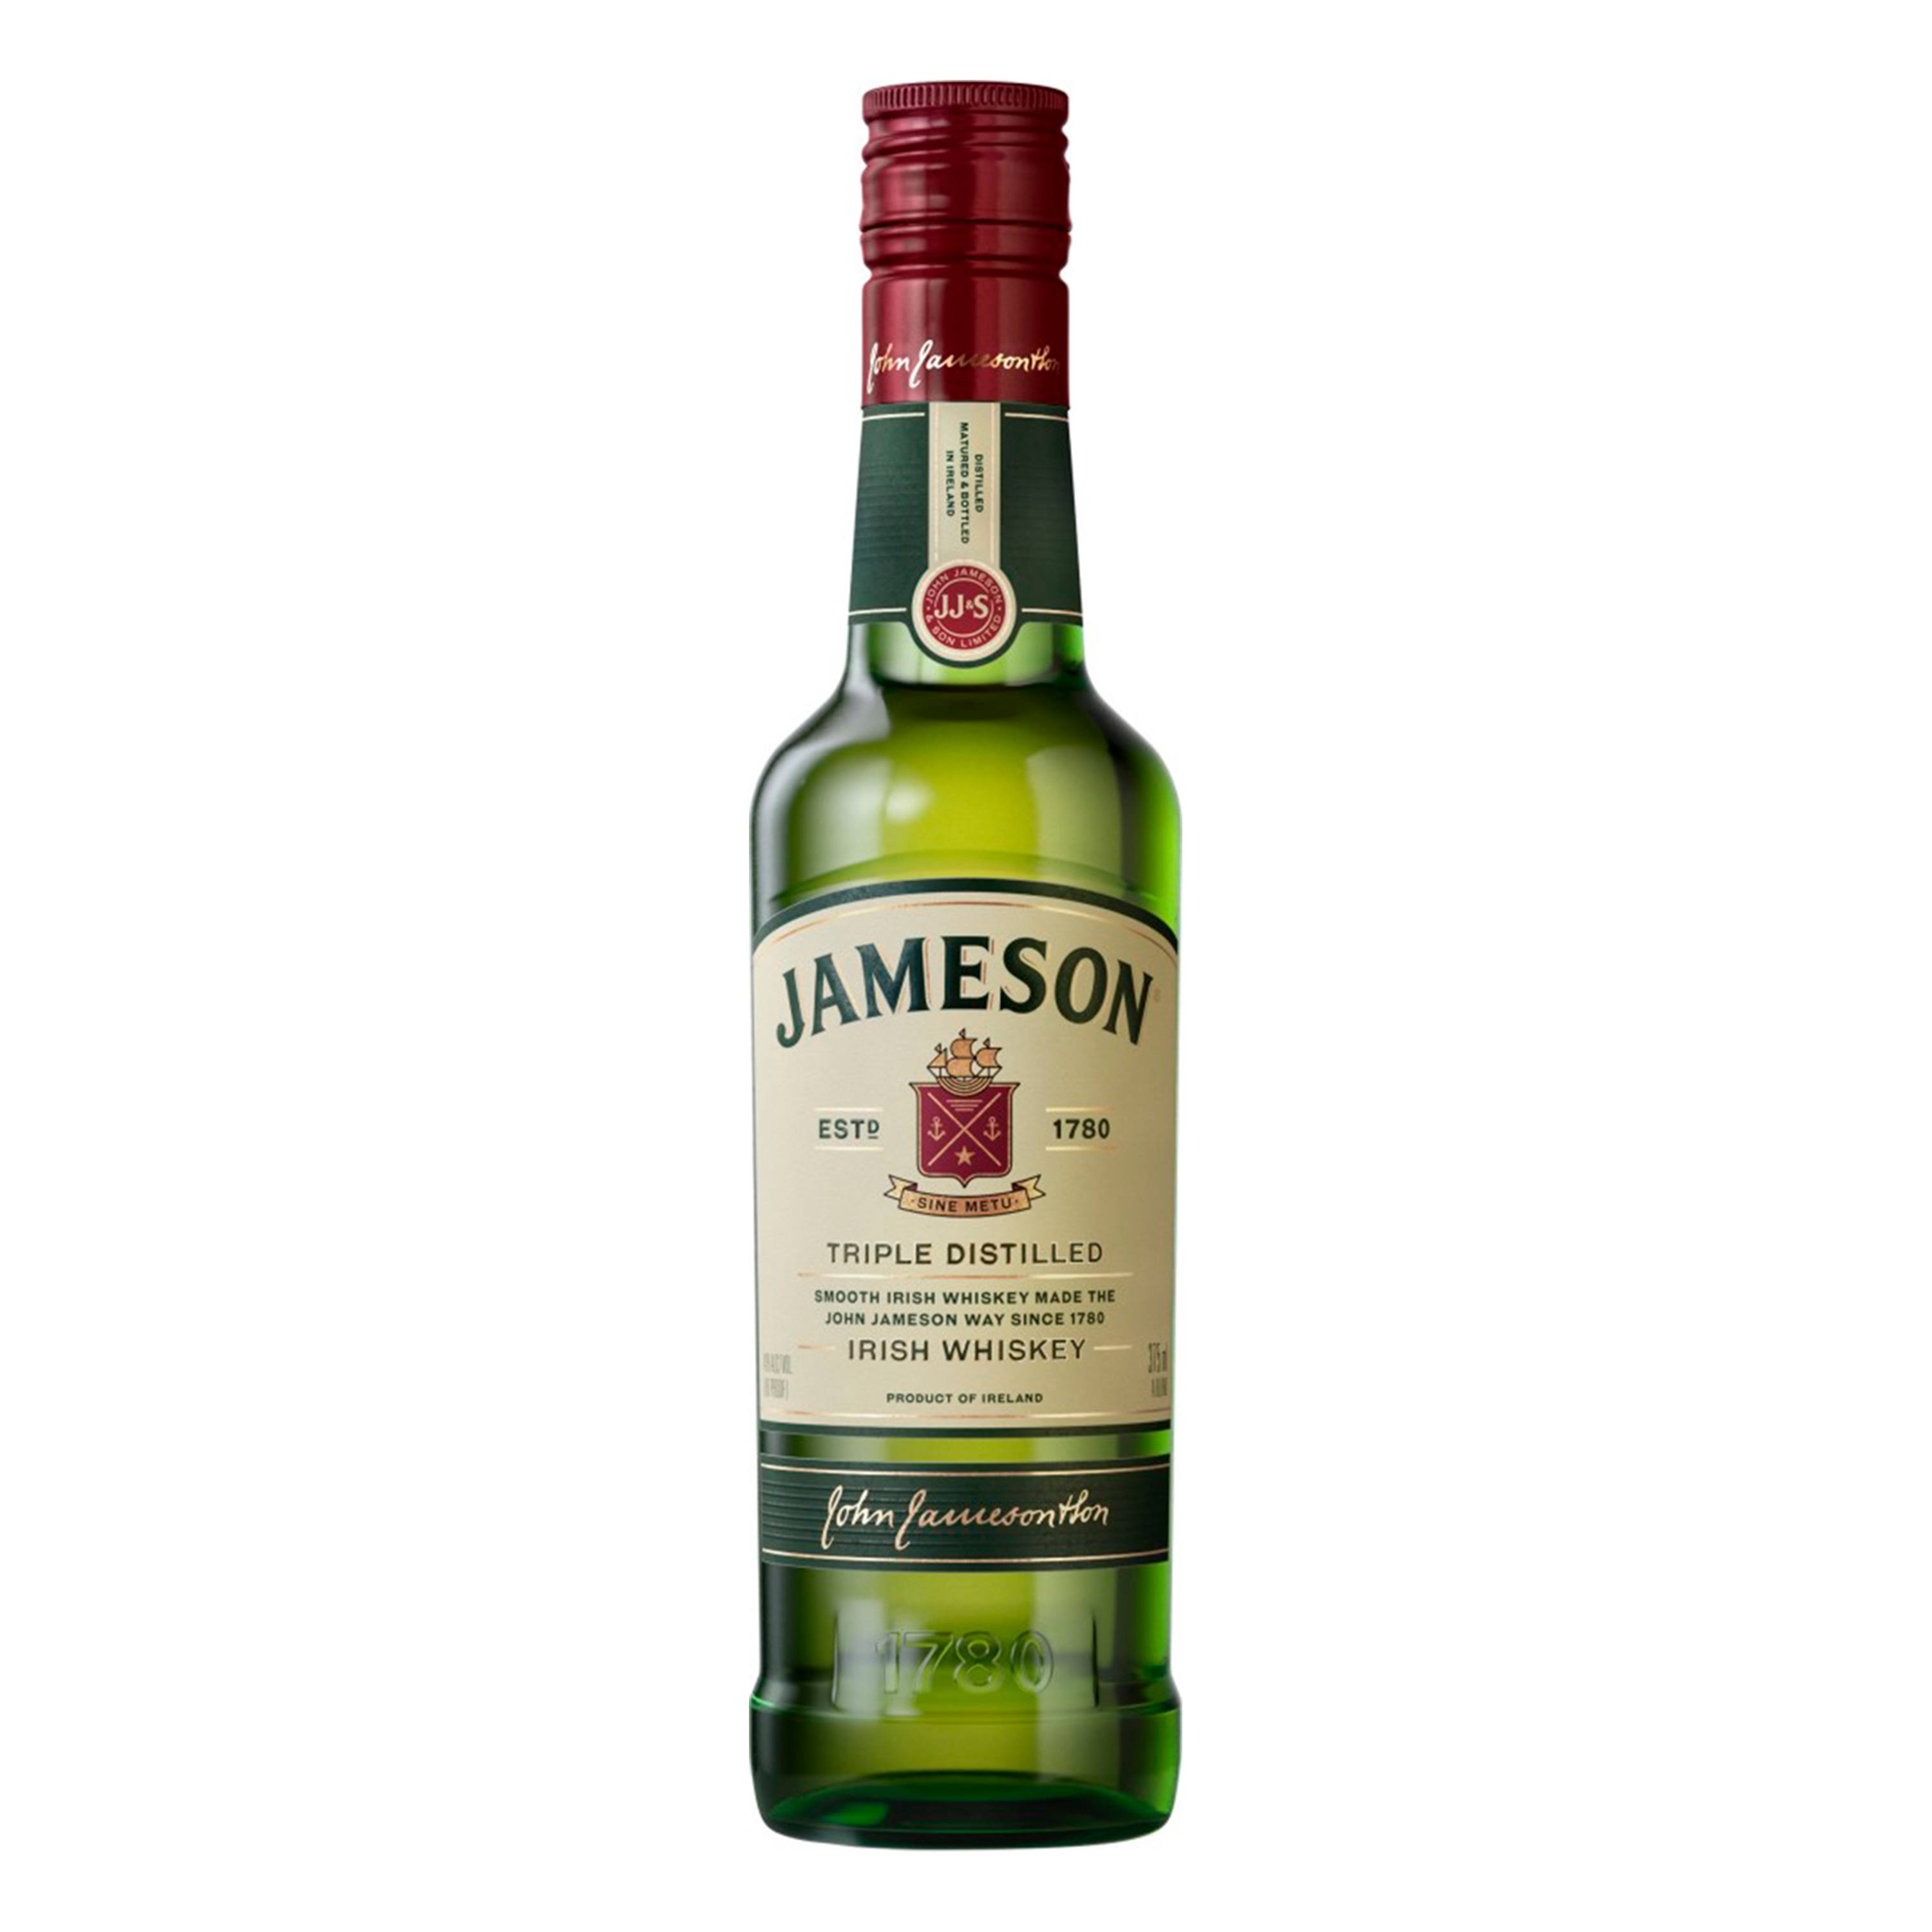 Jameson Irish Whiskey - 375 ml bottle